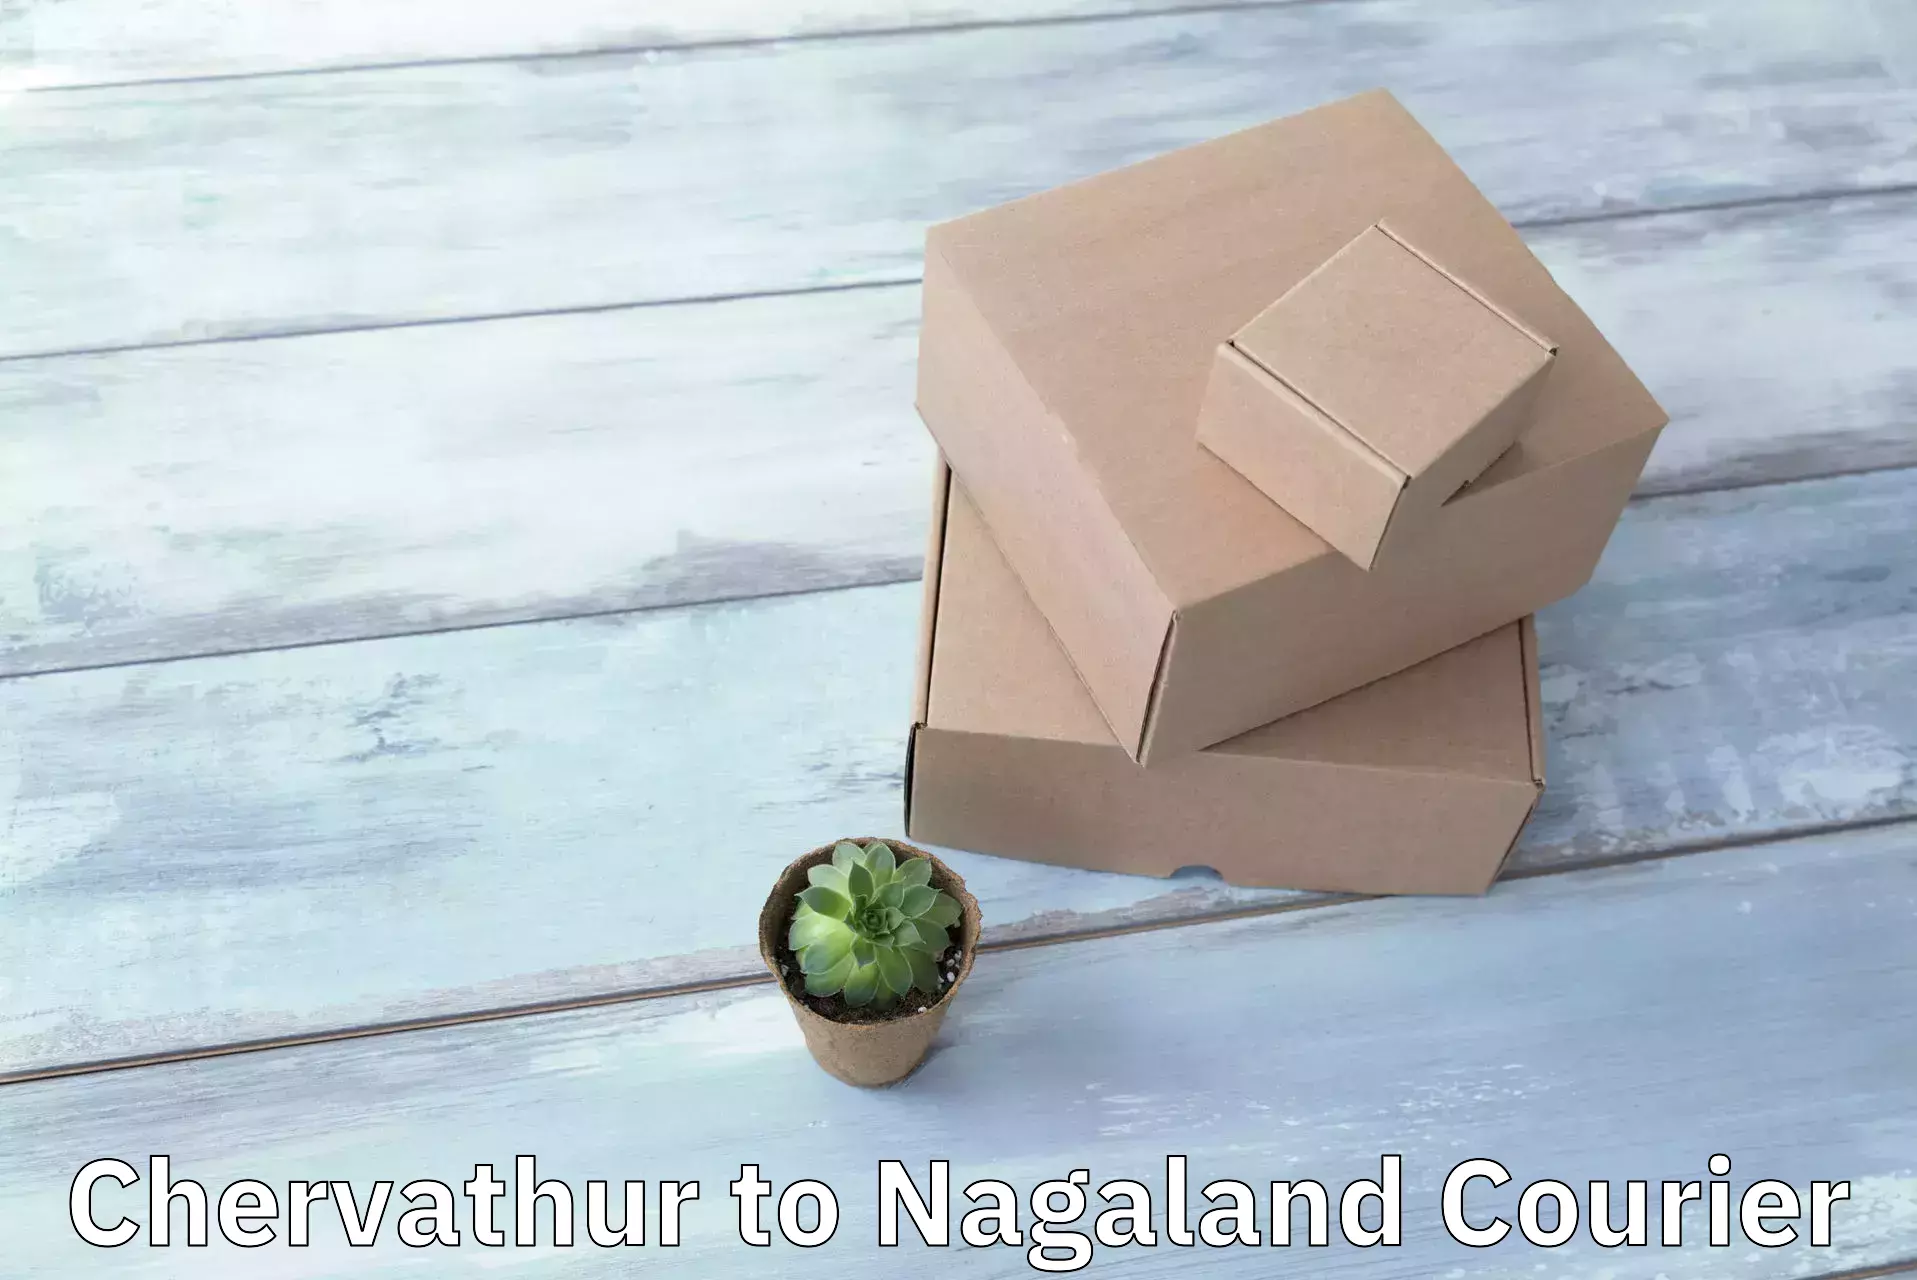 International parcel service Chervathur to Nagaland